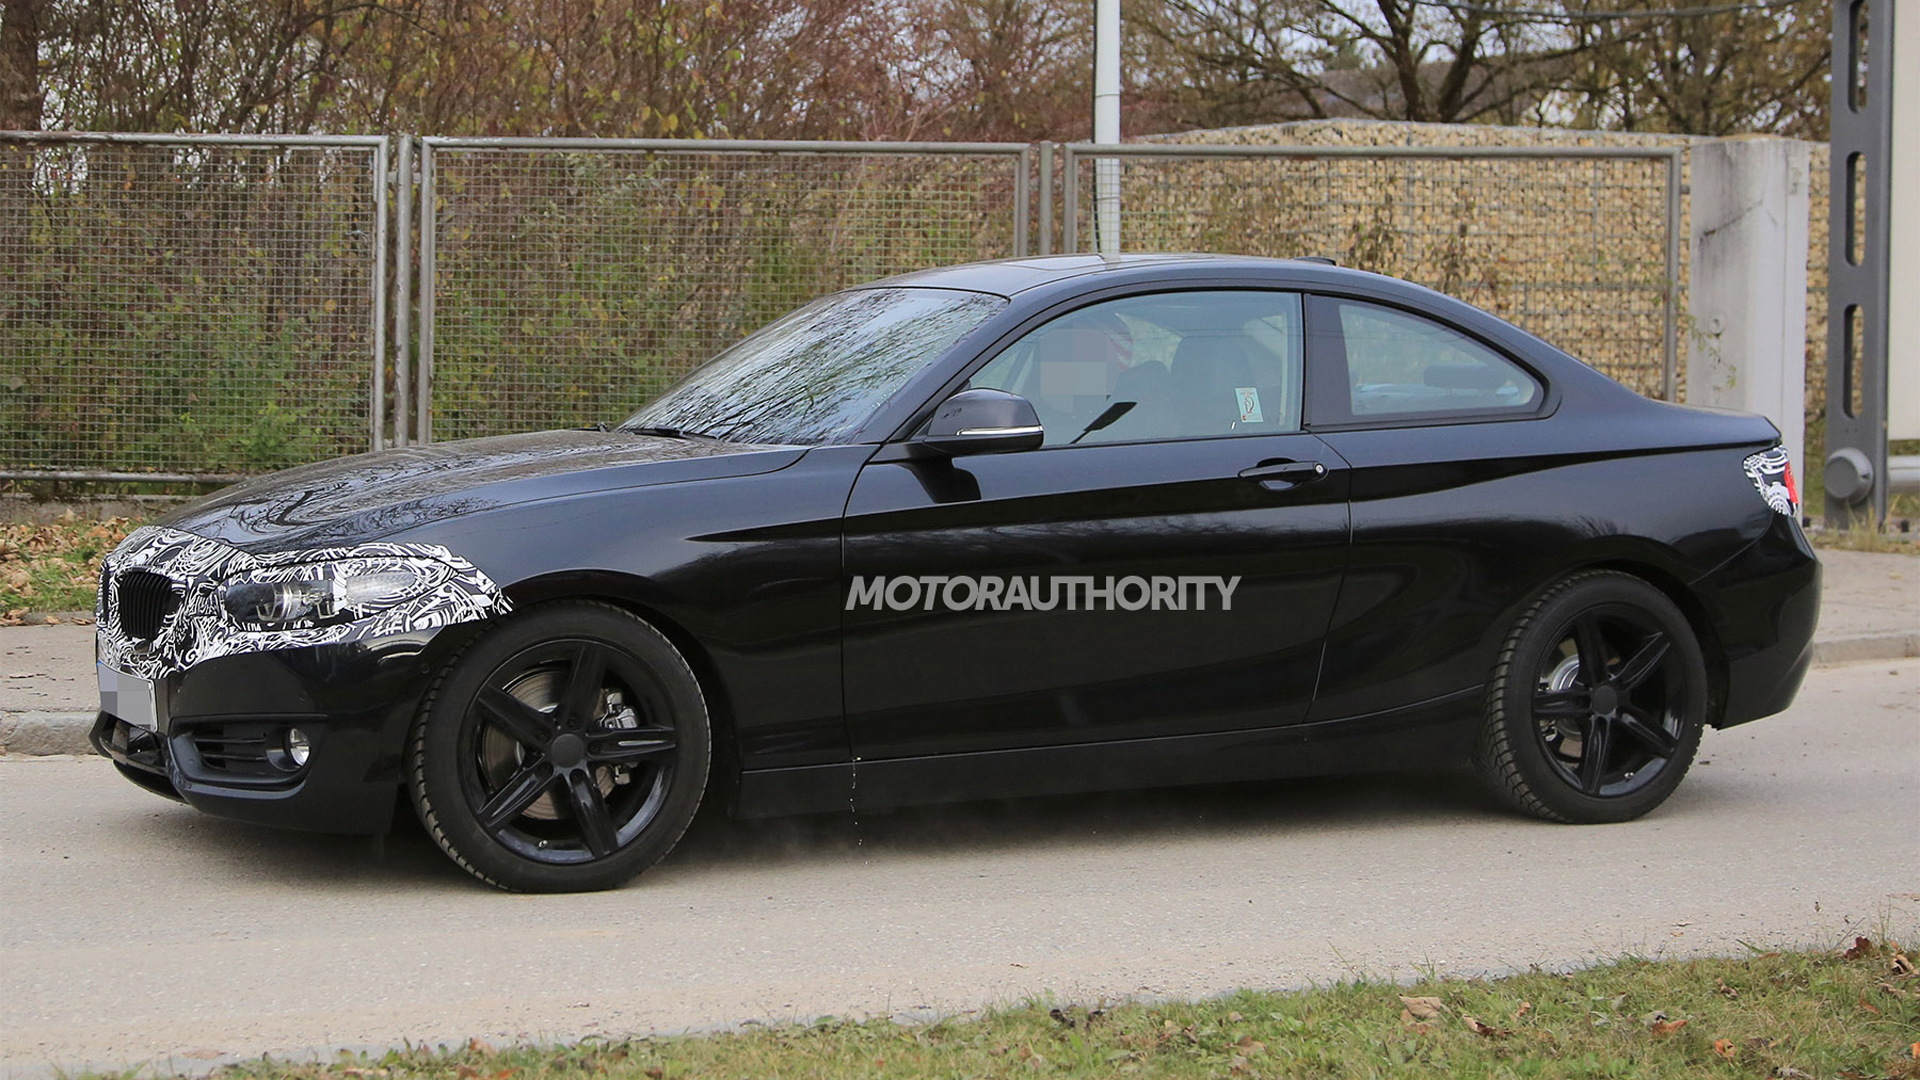 2018 BMW 2-Series facelift spy shots - Image via S. Baldauf/SB-Medien